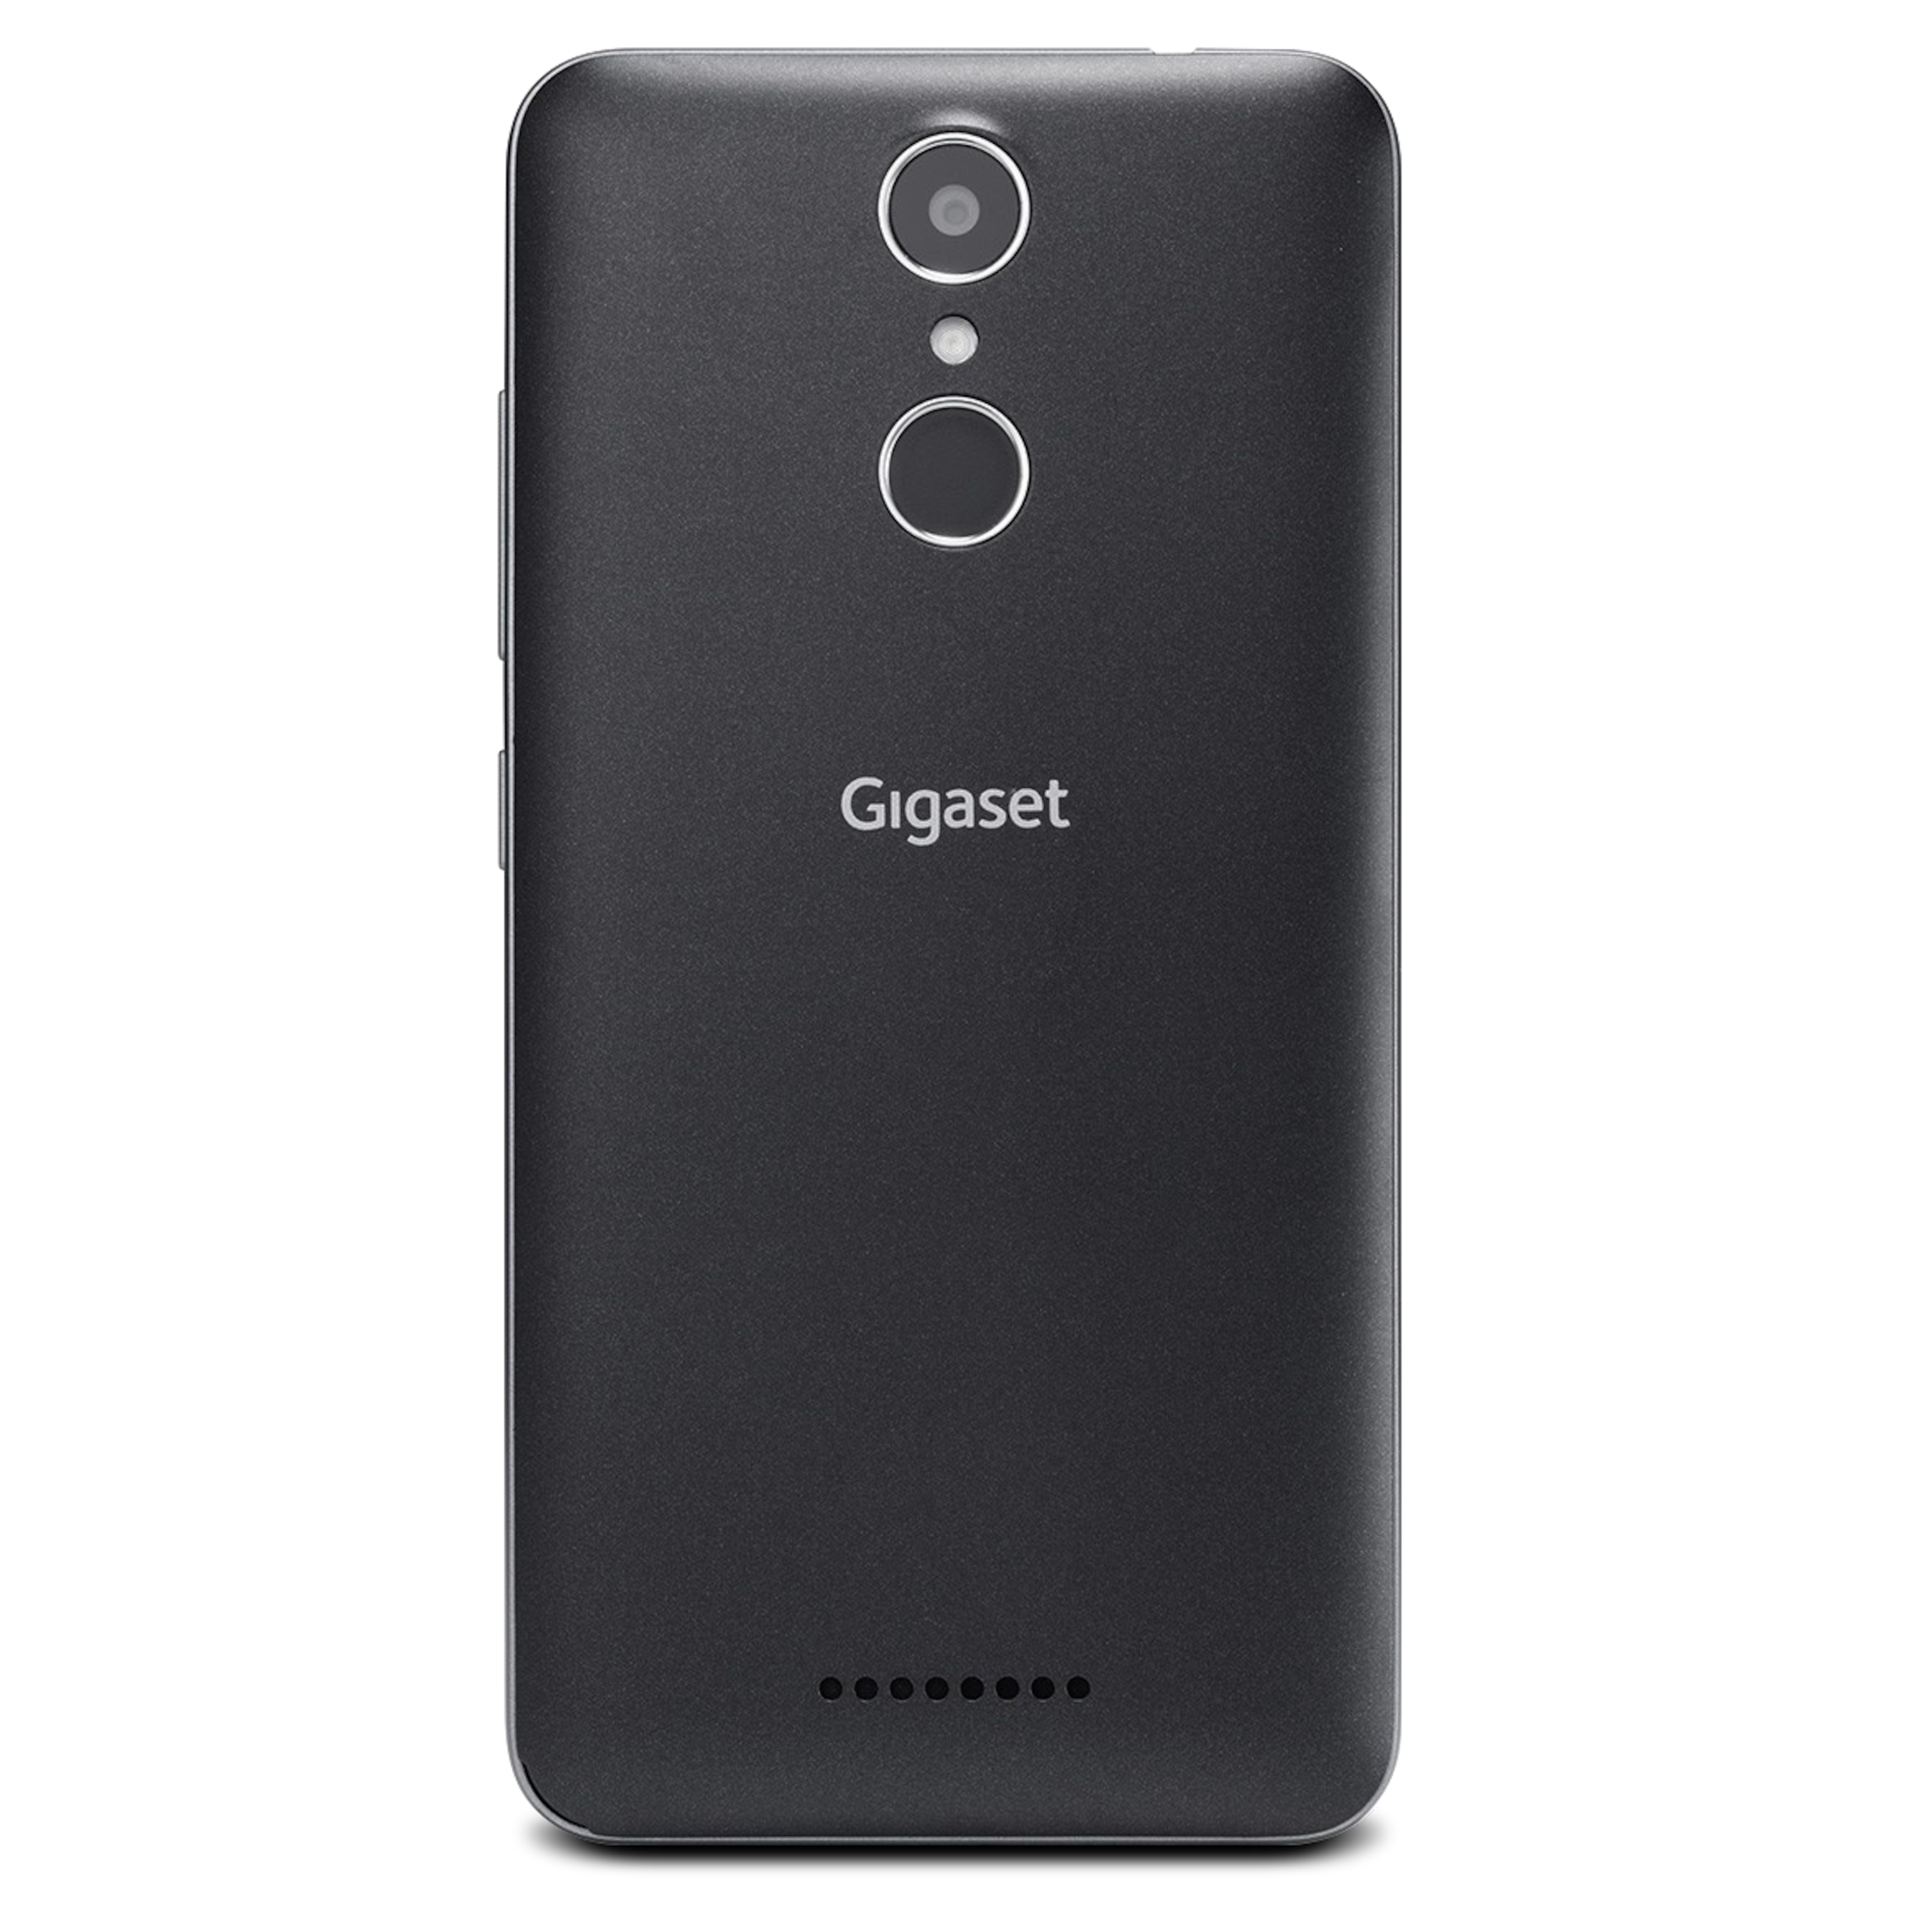 GIGASET Gigaset GS 160 Smartphone, 12,7 cm (5'') IPS HD Display, 1 GB RAM, 16 GB Speicher, Quad-Core-Prozessor, LTE  (B-Ware)